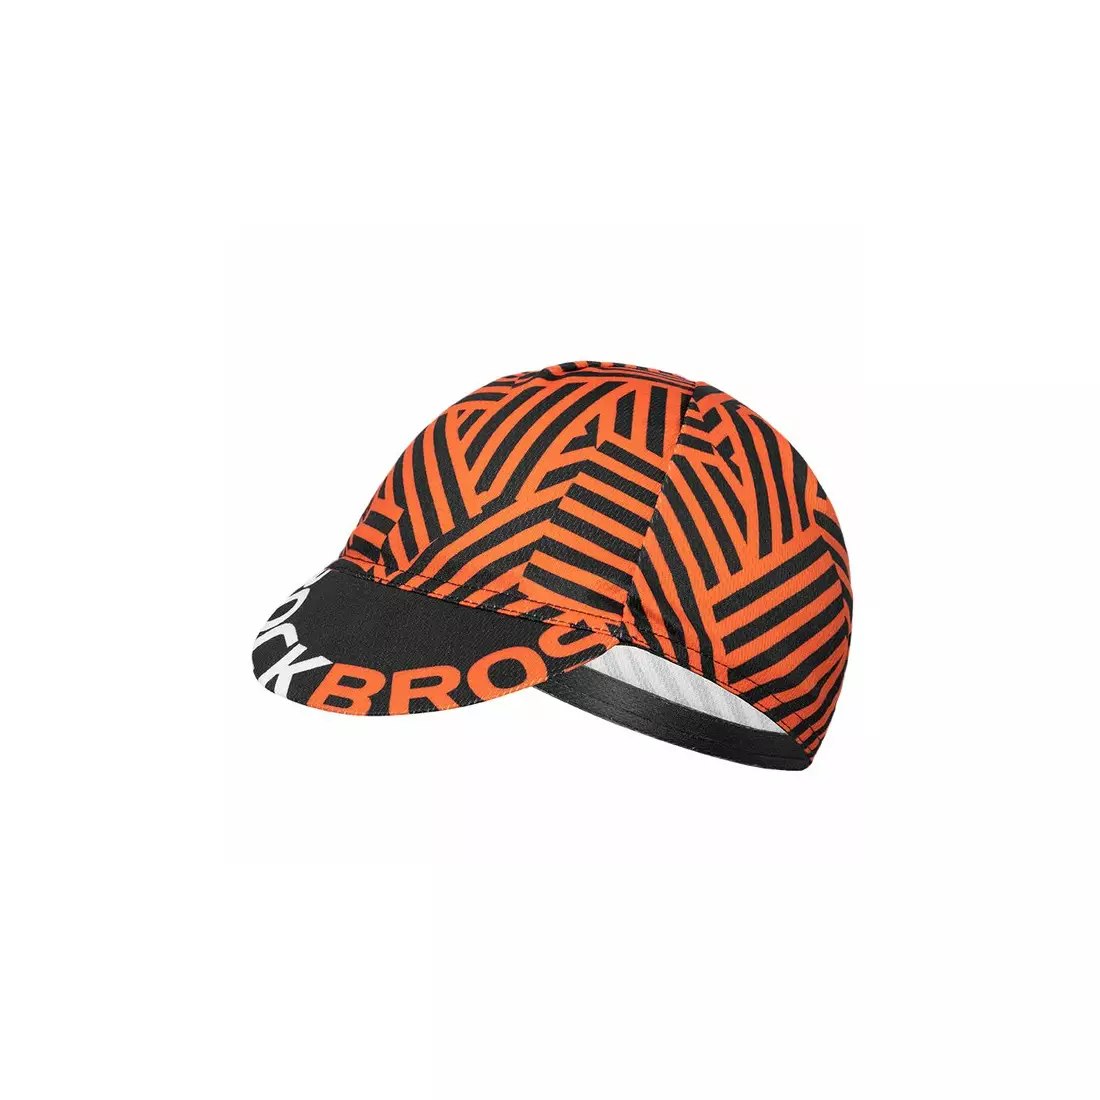 Rockbros cycling cap, orange MZ10017